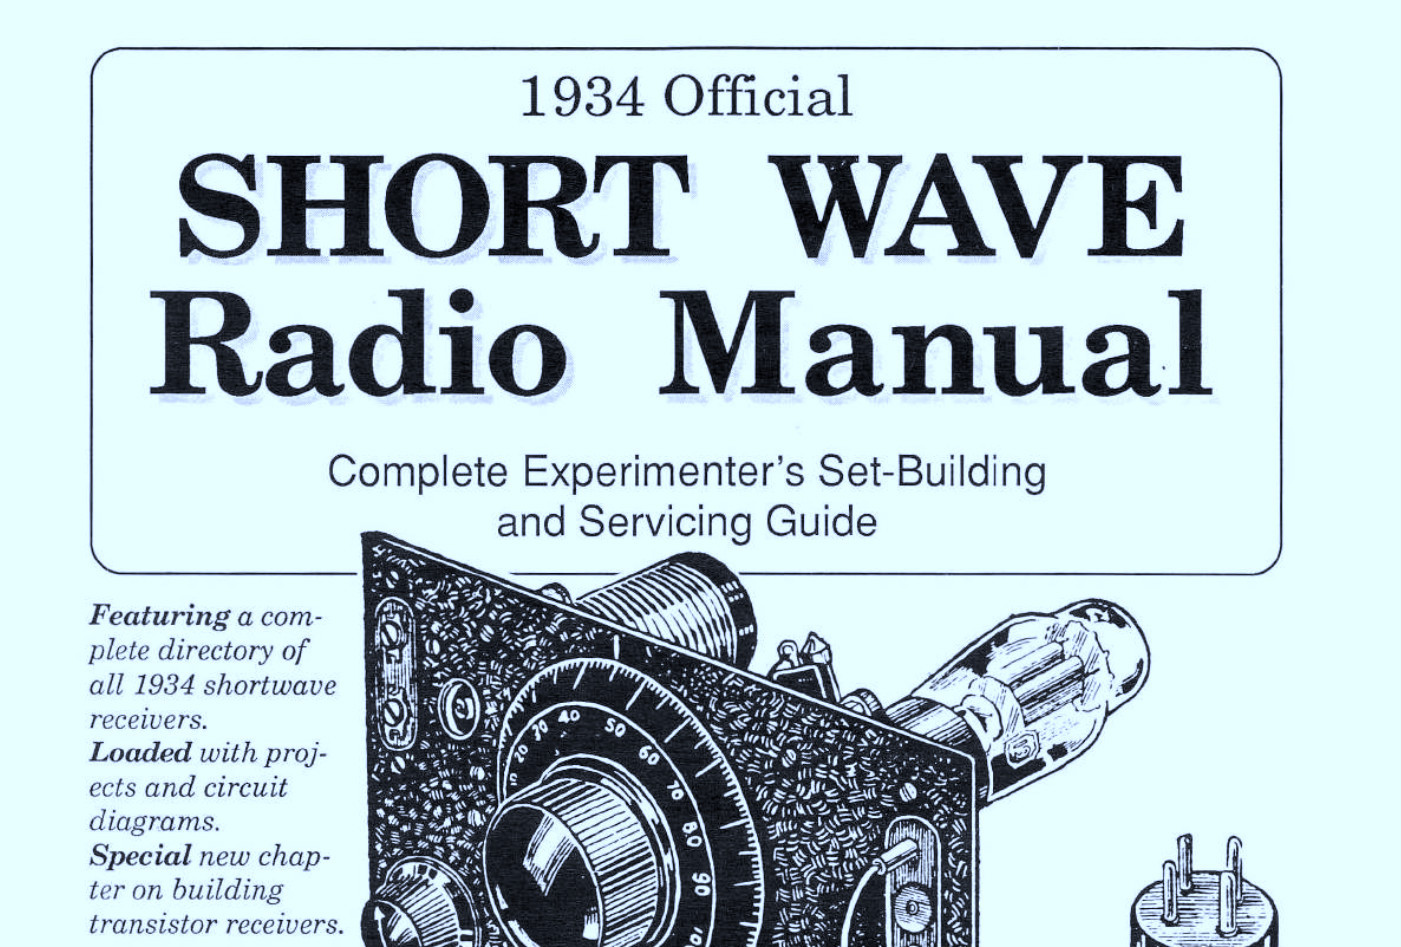 Hugo Gernsback's 1934 Official Short Wave Radio Manual  Complete Experimenter’s Set-Building and Servicing Guide